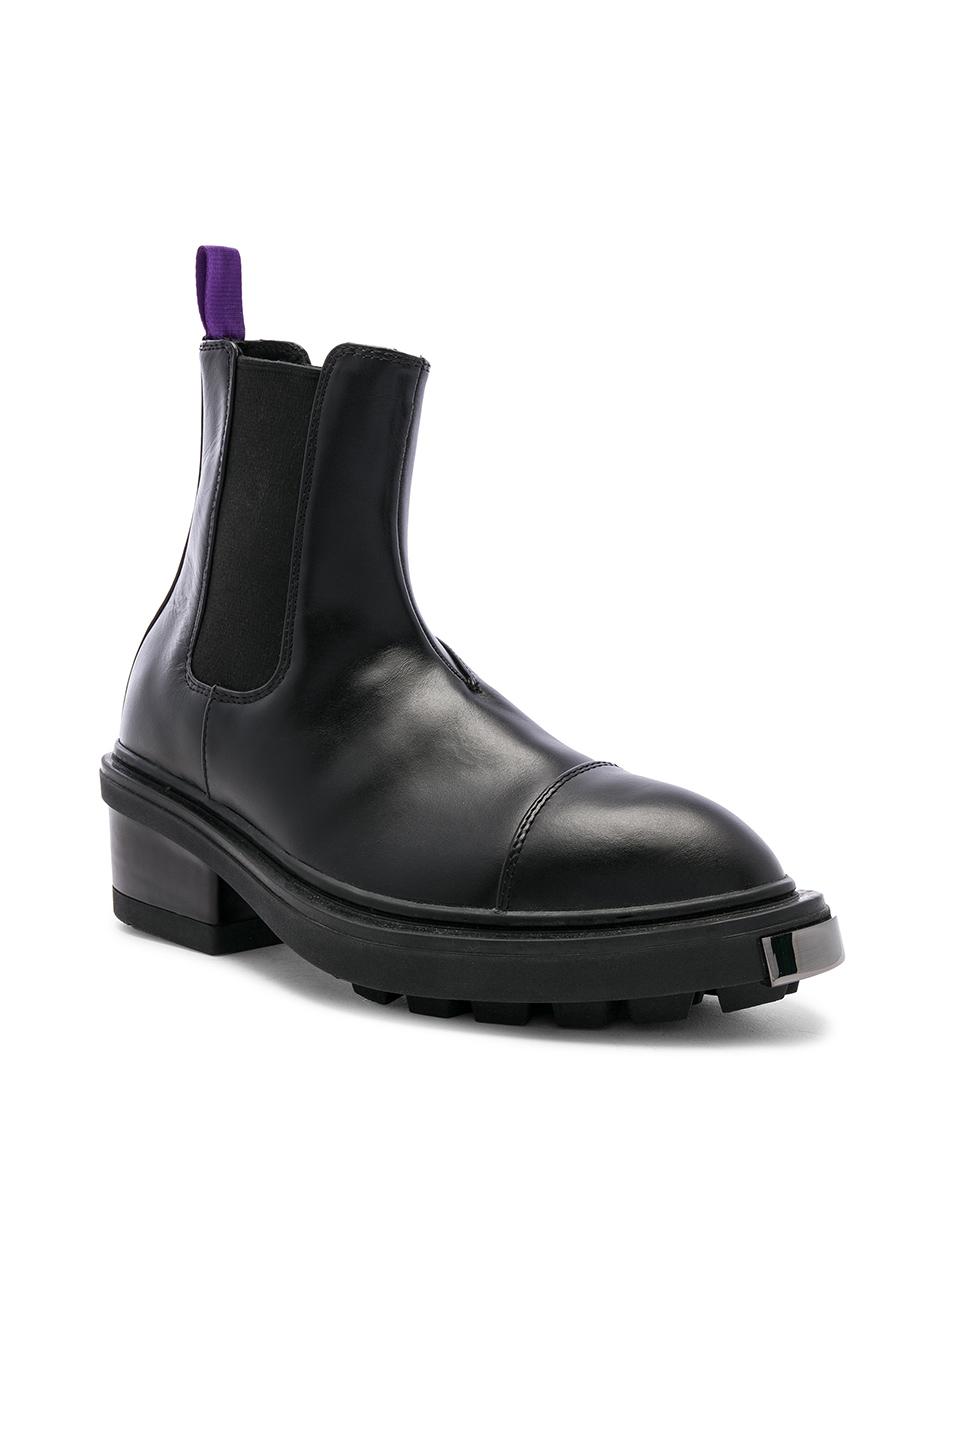 Eytys Nikita Leather Boot in Black for Men - Lyst